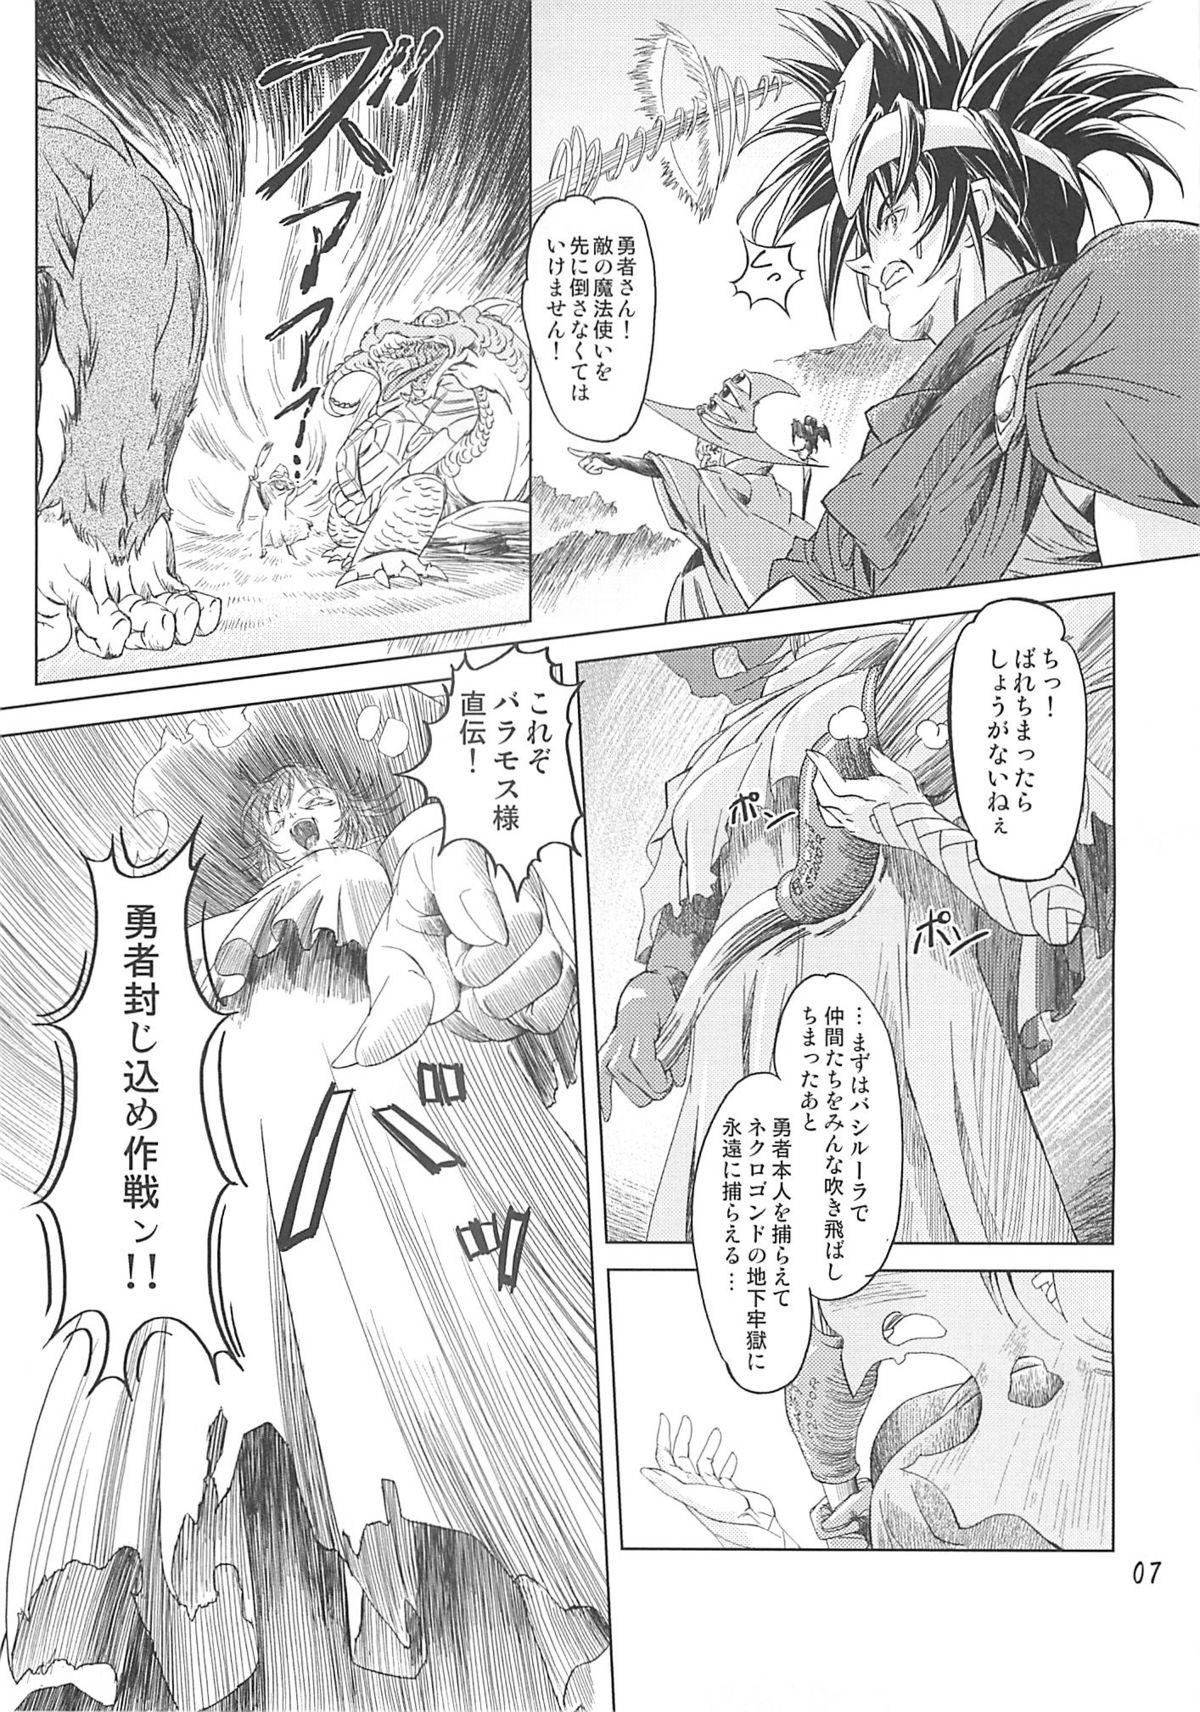 Jeans Mahoutsukai vs. - Dragon quest iii Foreskin - Page 6